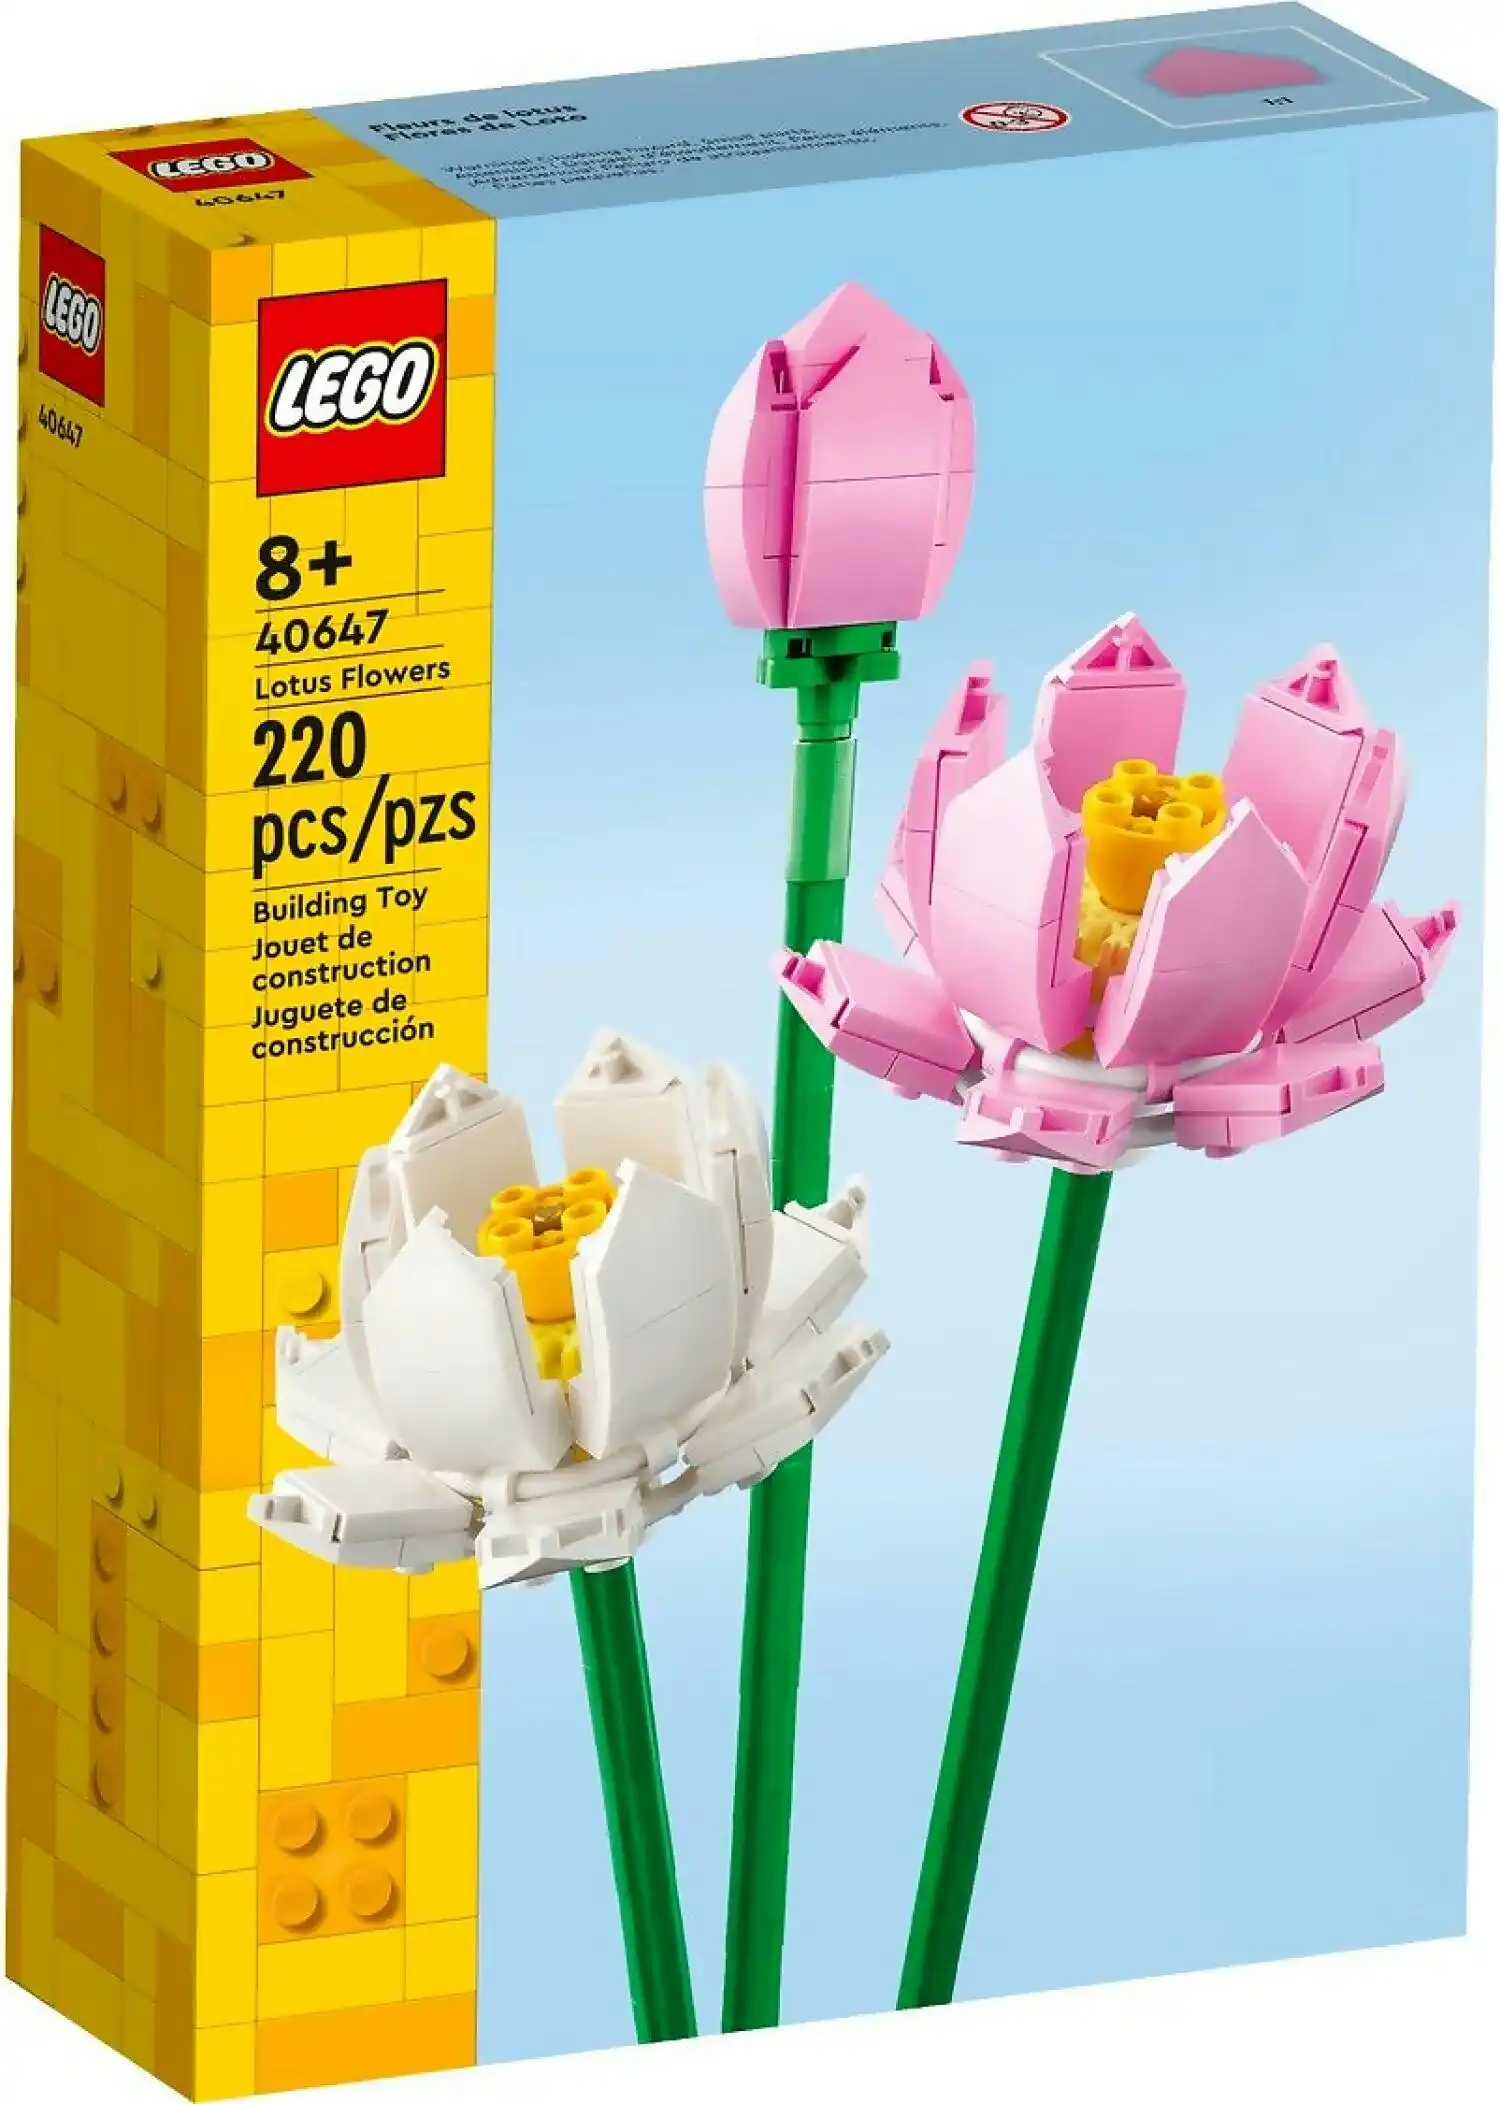 LEGO 40647 Lotus Flowers - Icons Botanical Collection